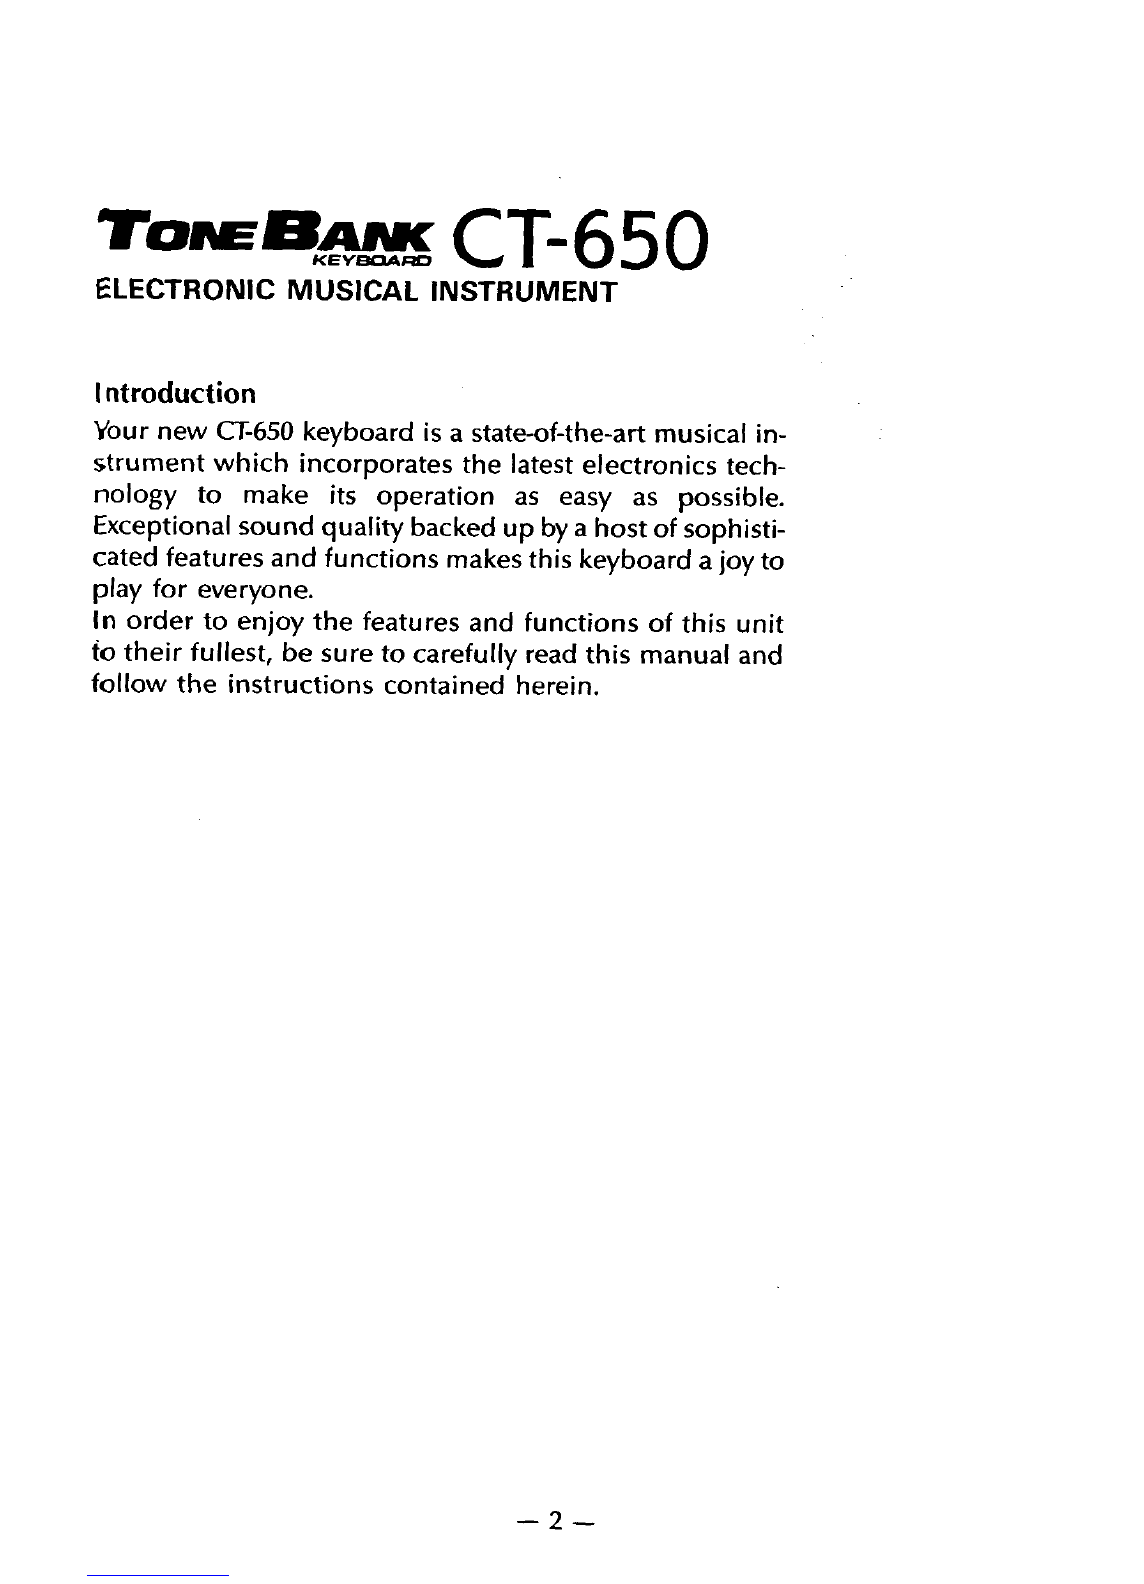 Manual Casio CT-650 Tone bank (page 2 of 56) (English, Spanish)